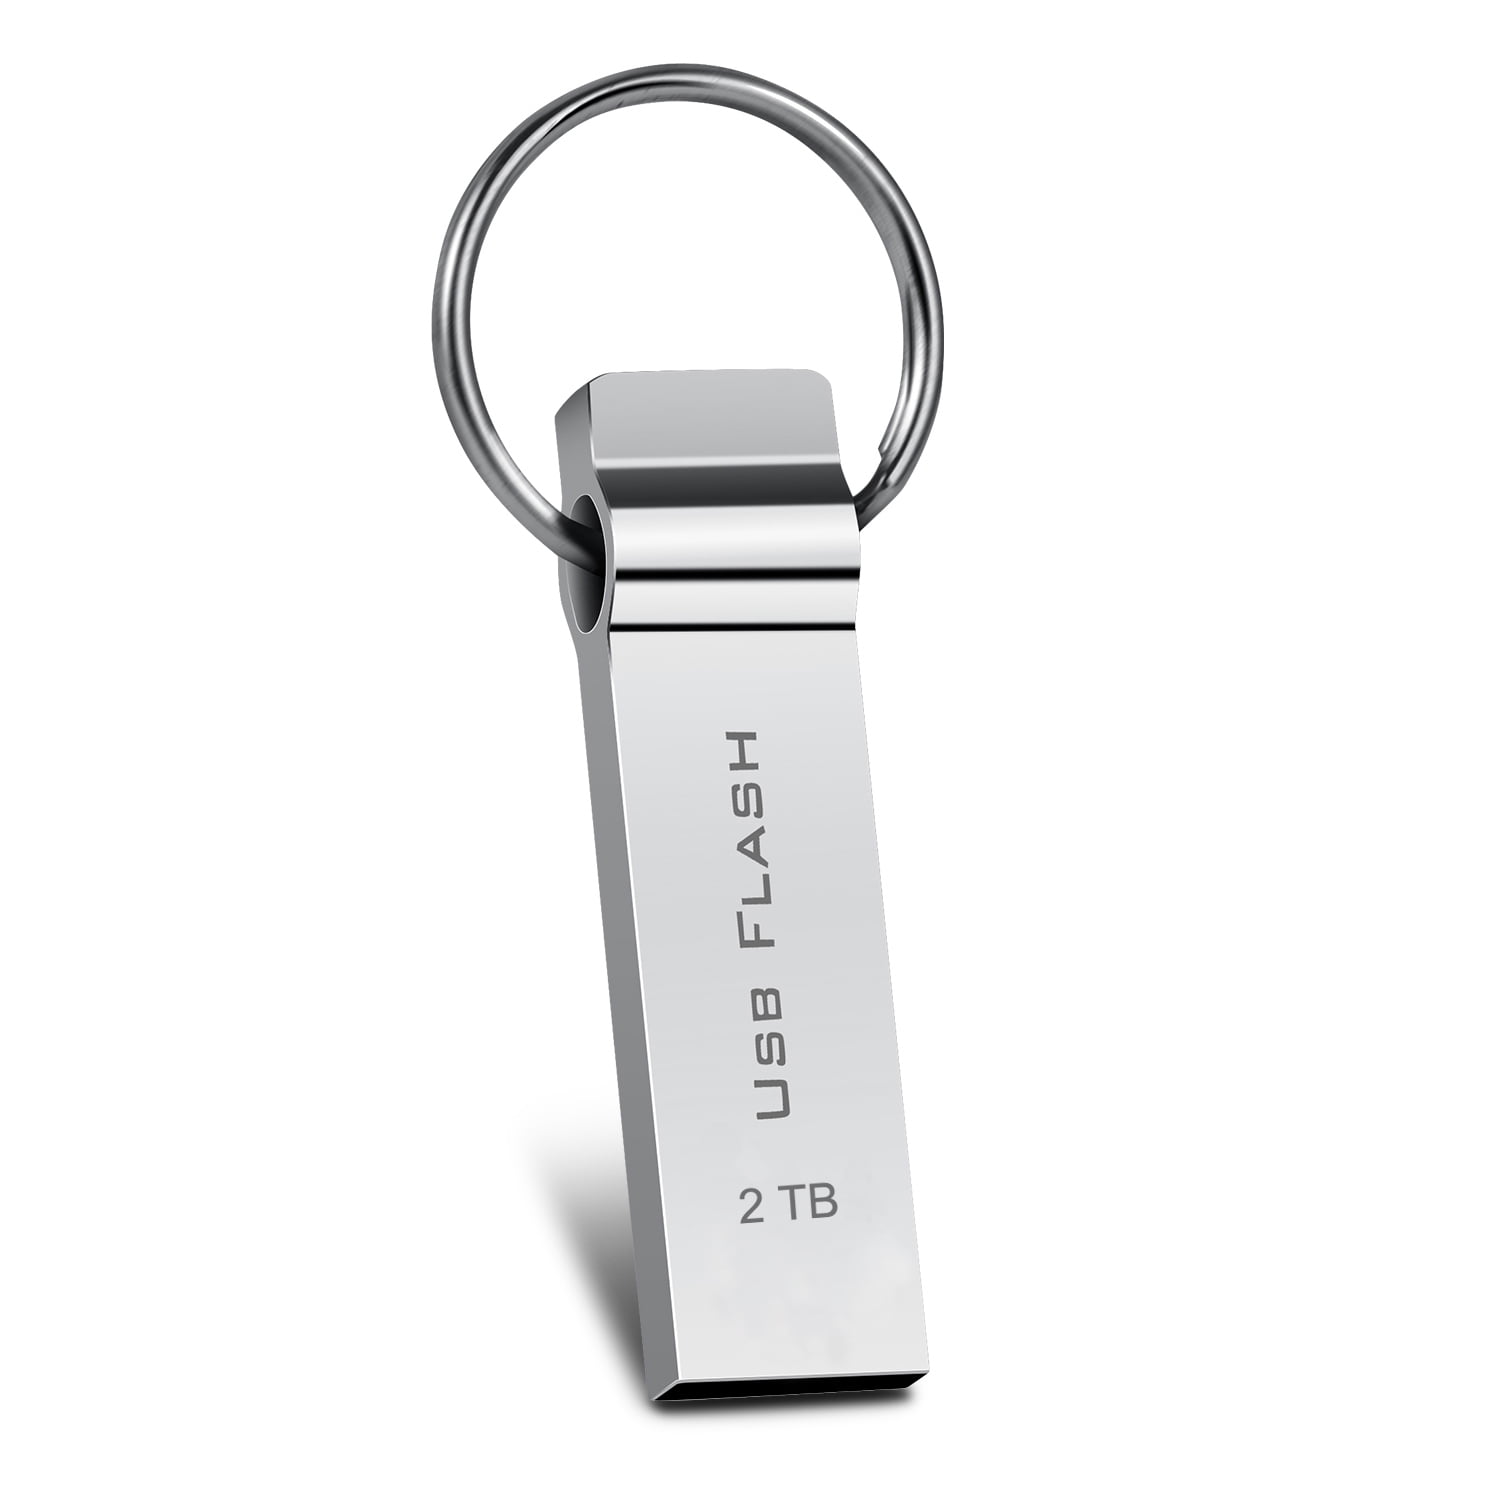 Jonephe 2TB USB 3.0 Flash Drive Memory Stick Metal Waterproof Thumb Drive Stick with Keychain High-Speed USB Stick for PC/Laptop External Storage and Backup Data/Photo/Video Sliver 